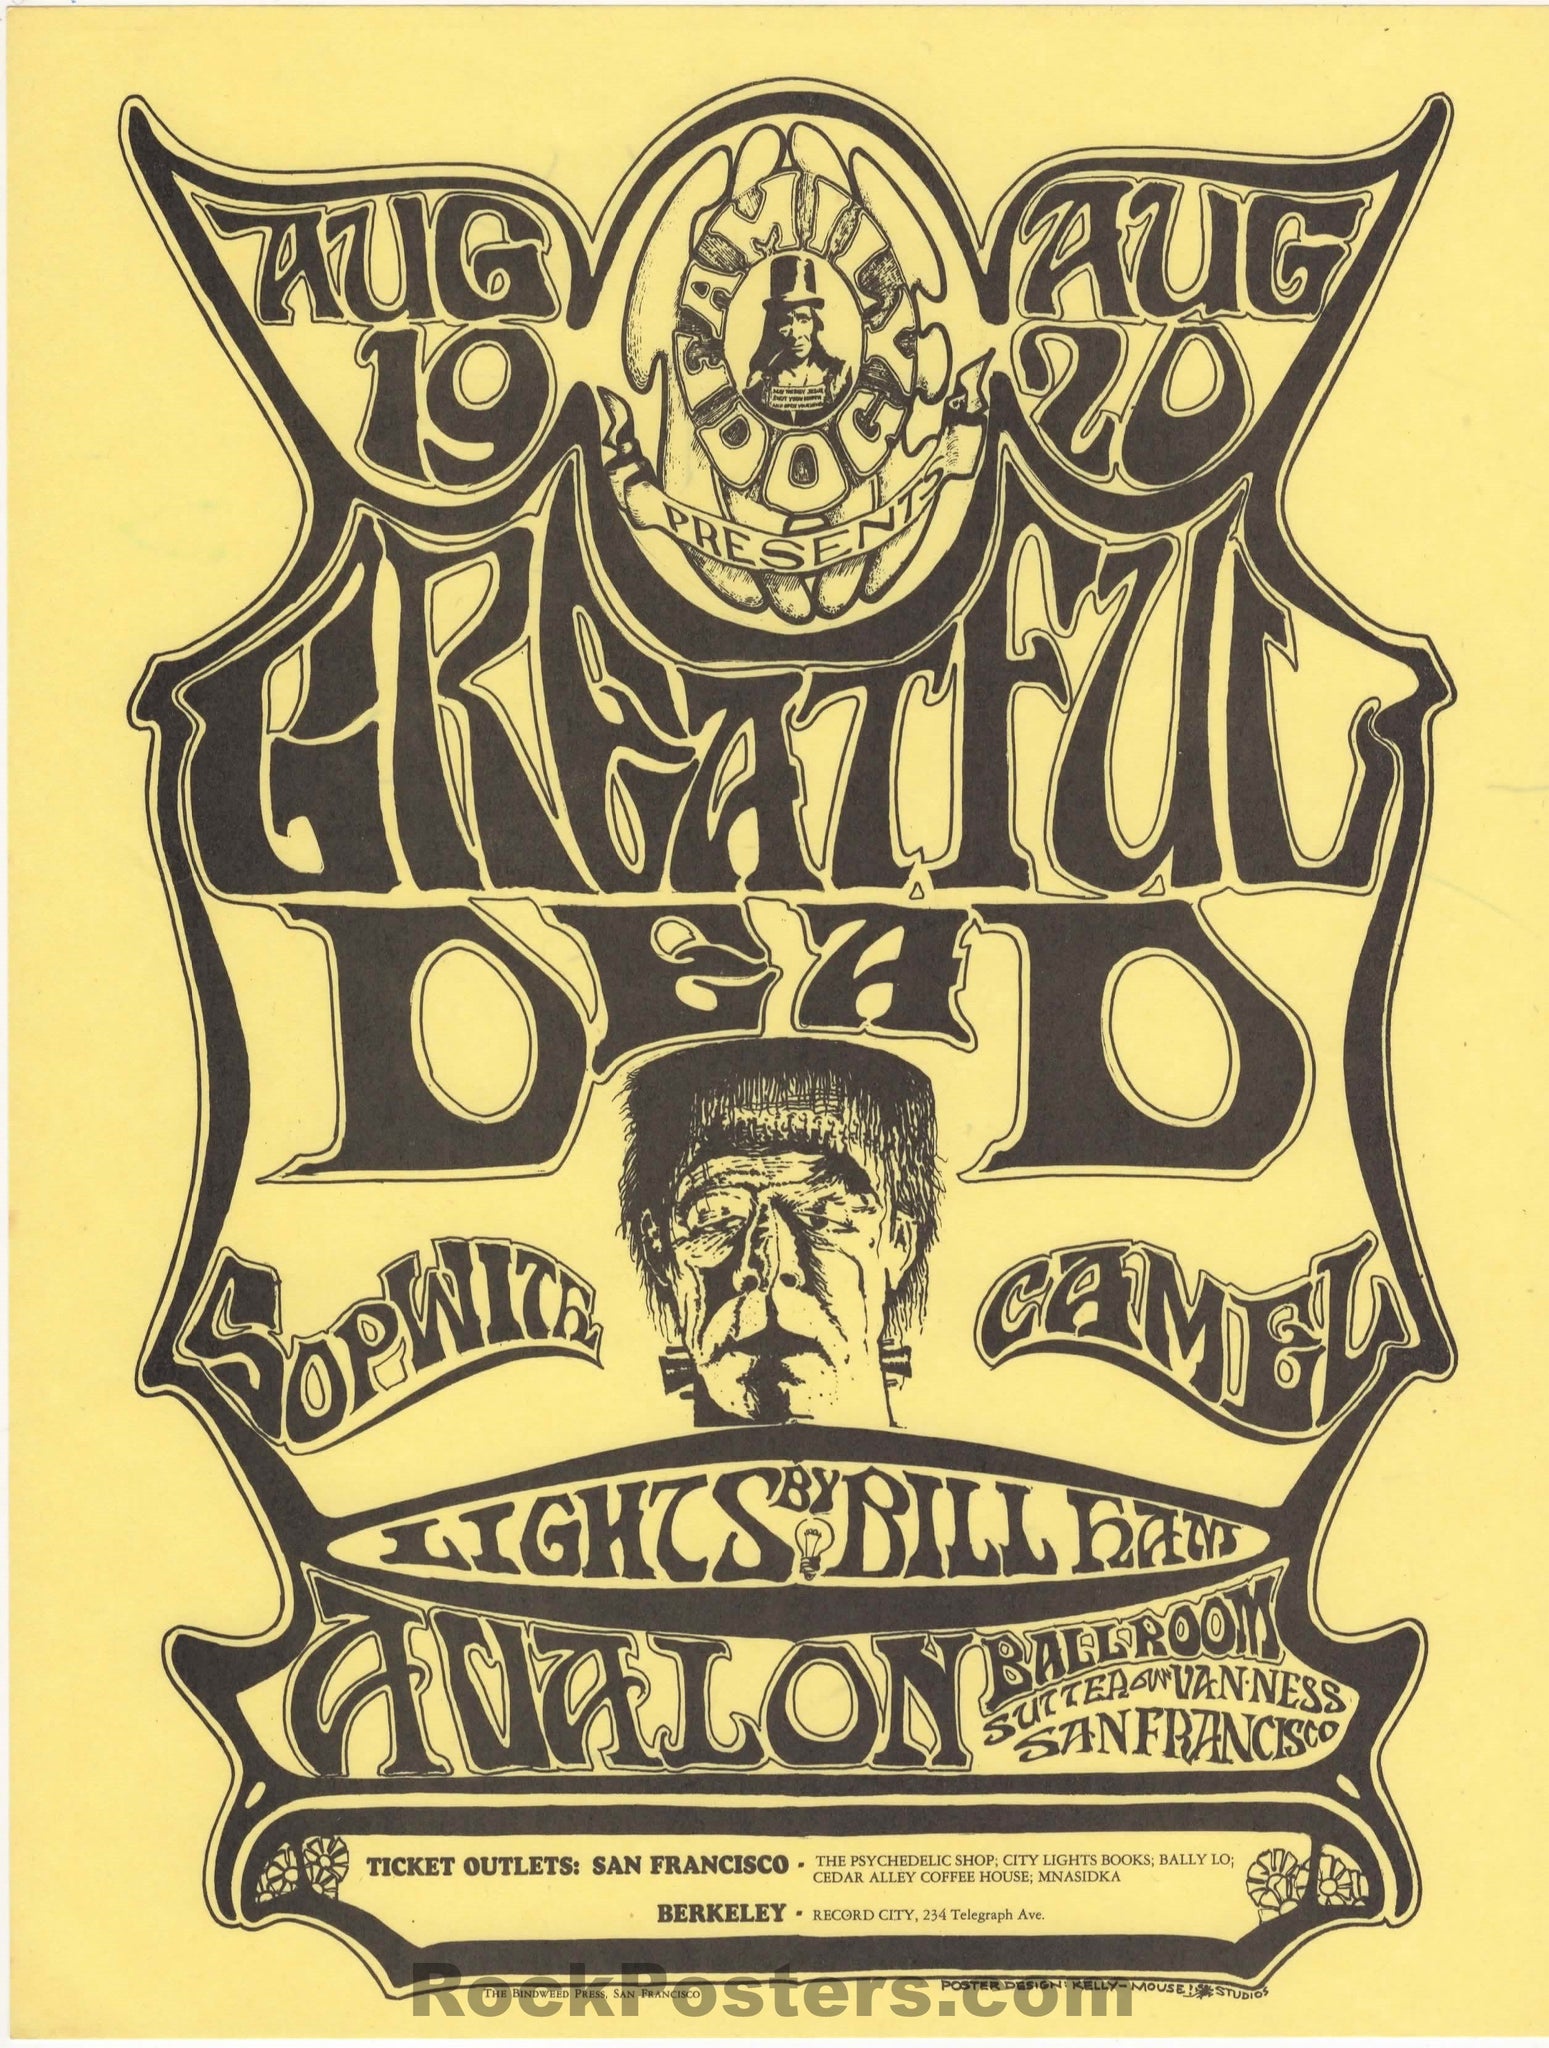 FD-22 - The Grateful Dead - 1966 Handbill - Avalon Ballroom - Near Mint